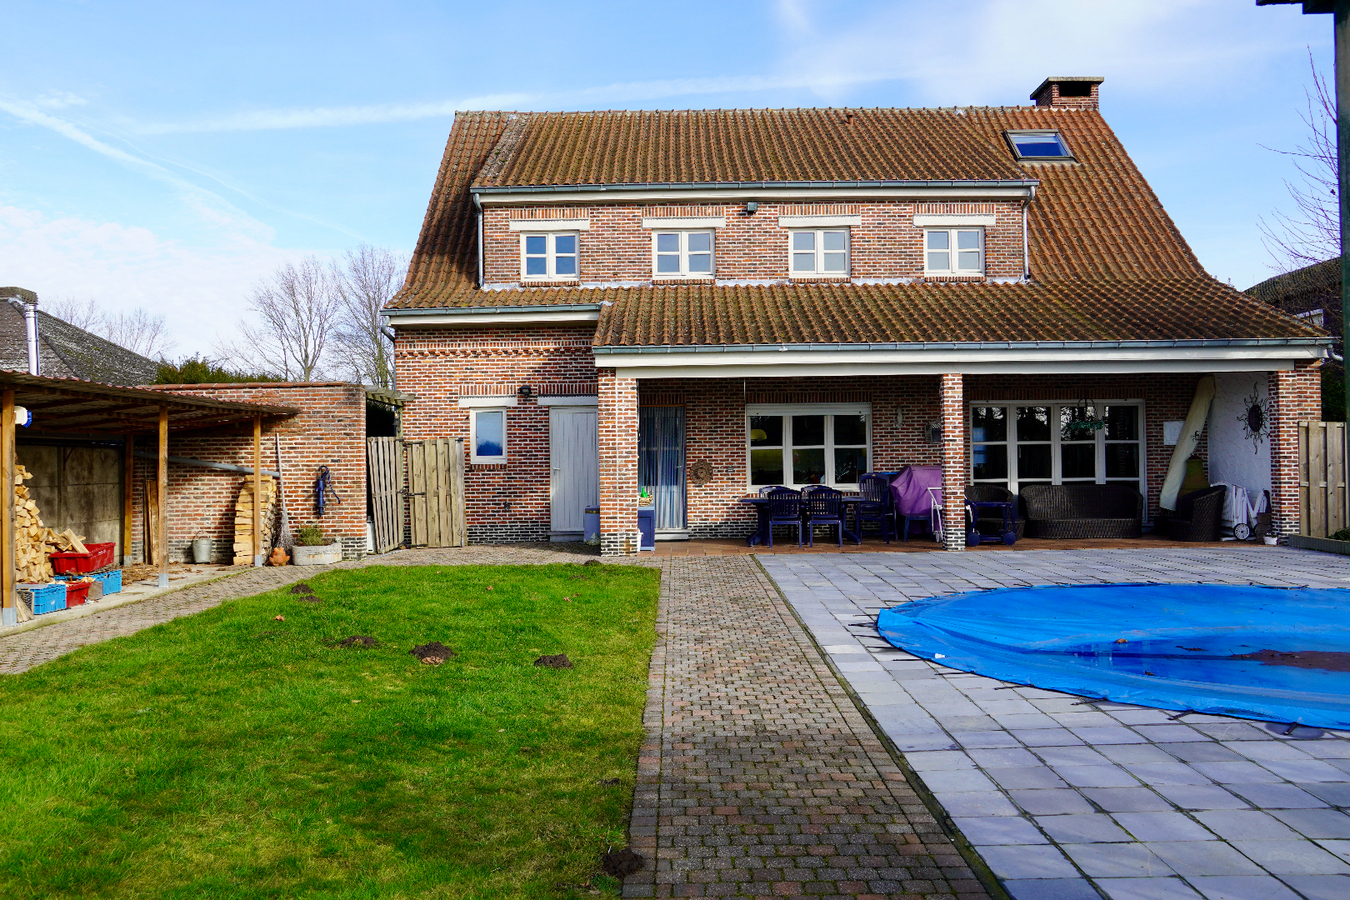 Property sold in Sint-Katelijne-Waver